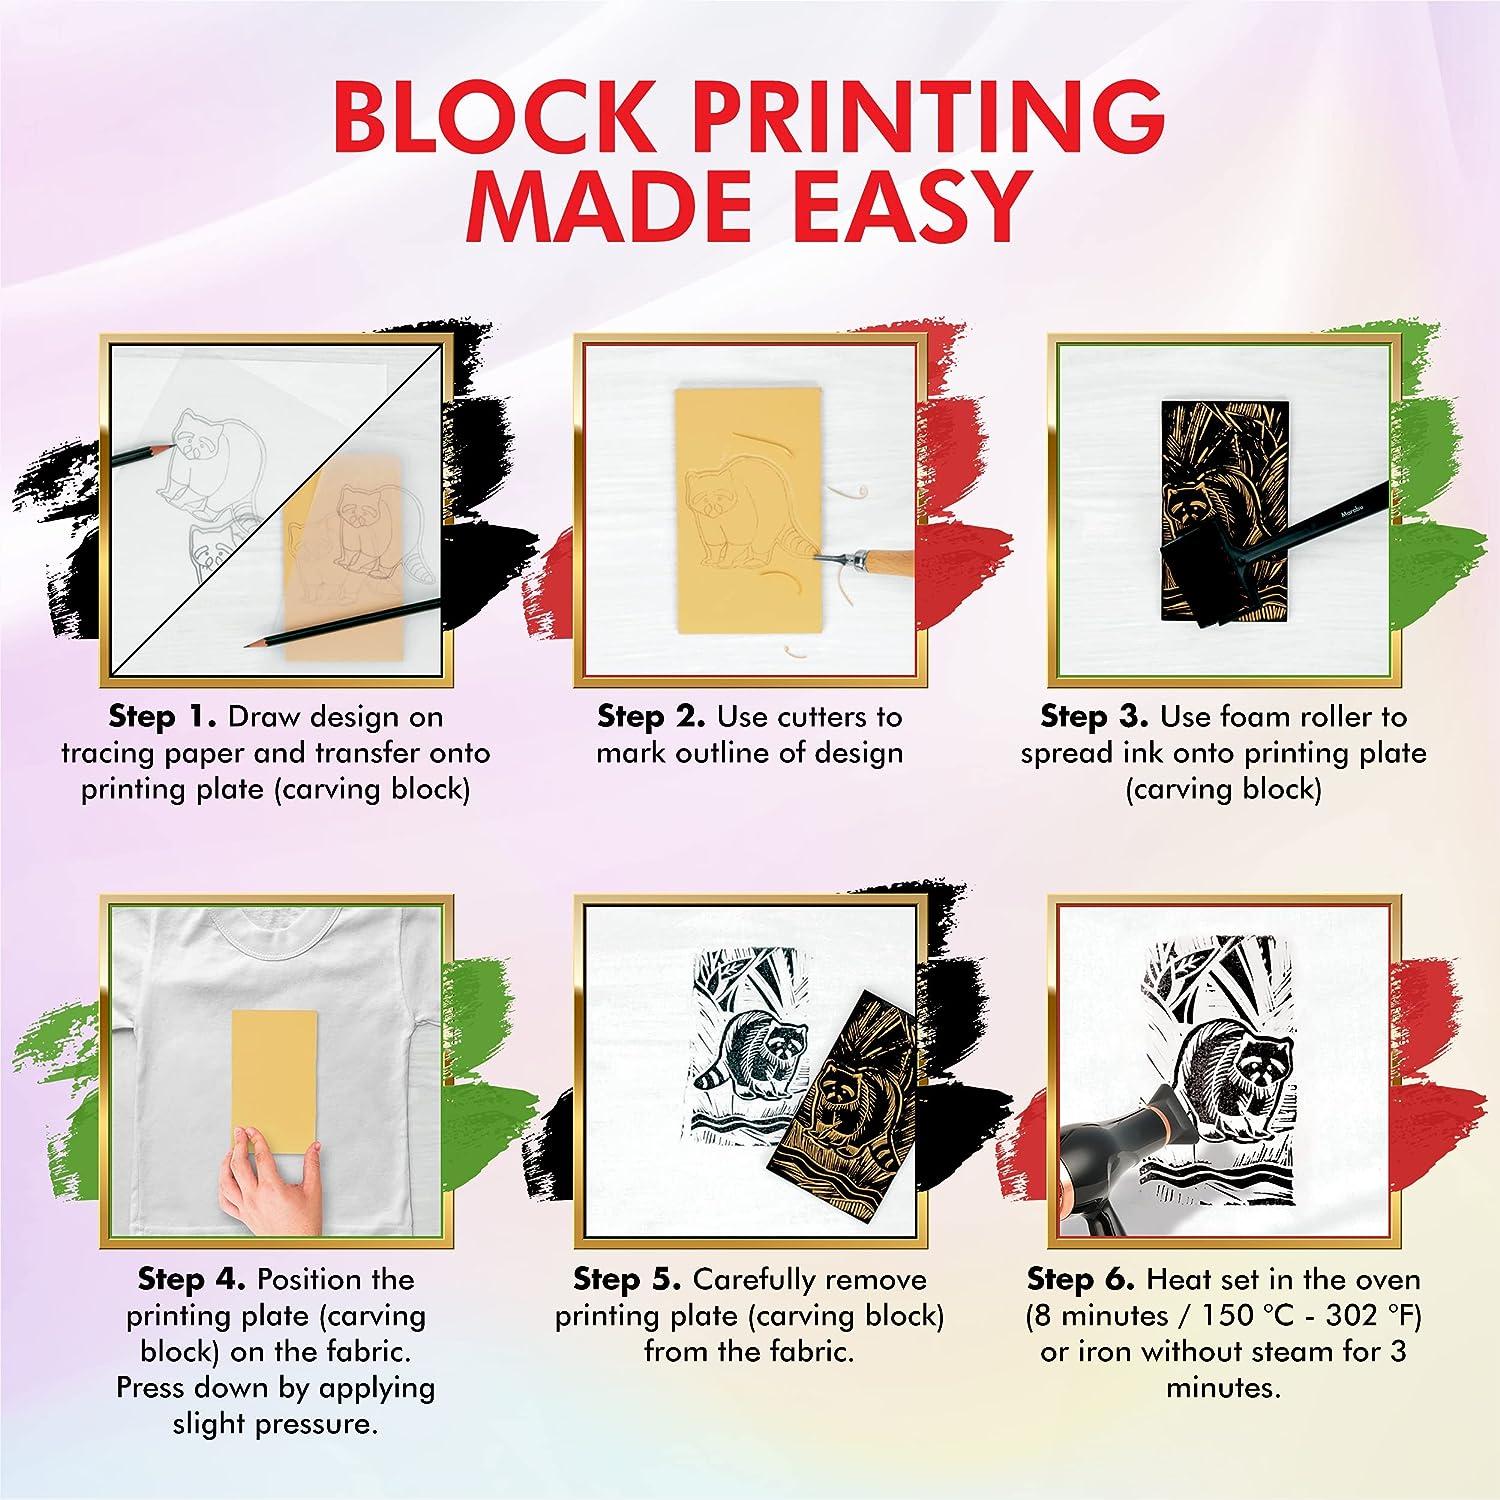 Deluxe Block Printing Kit